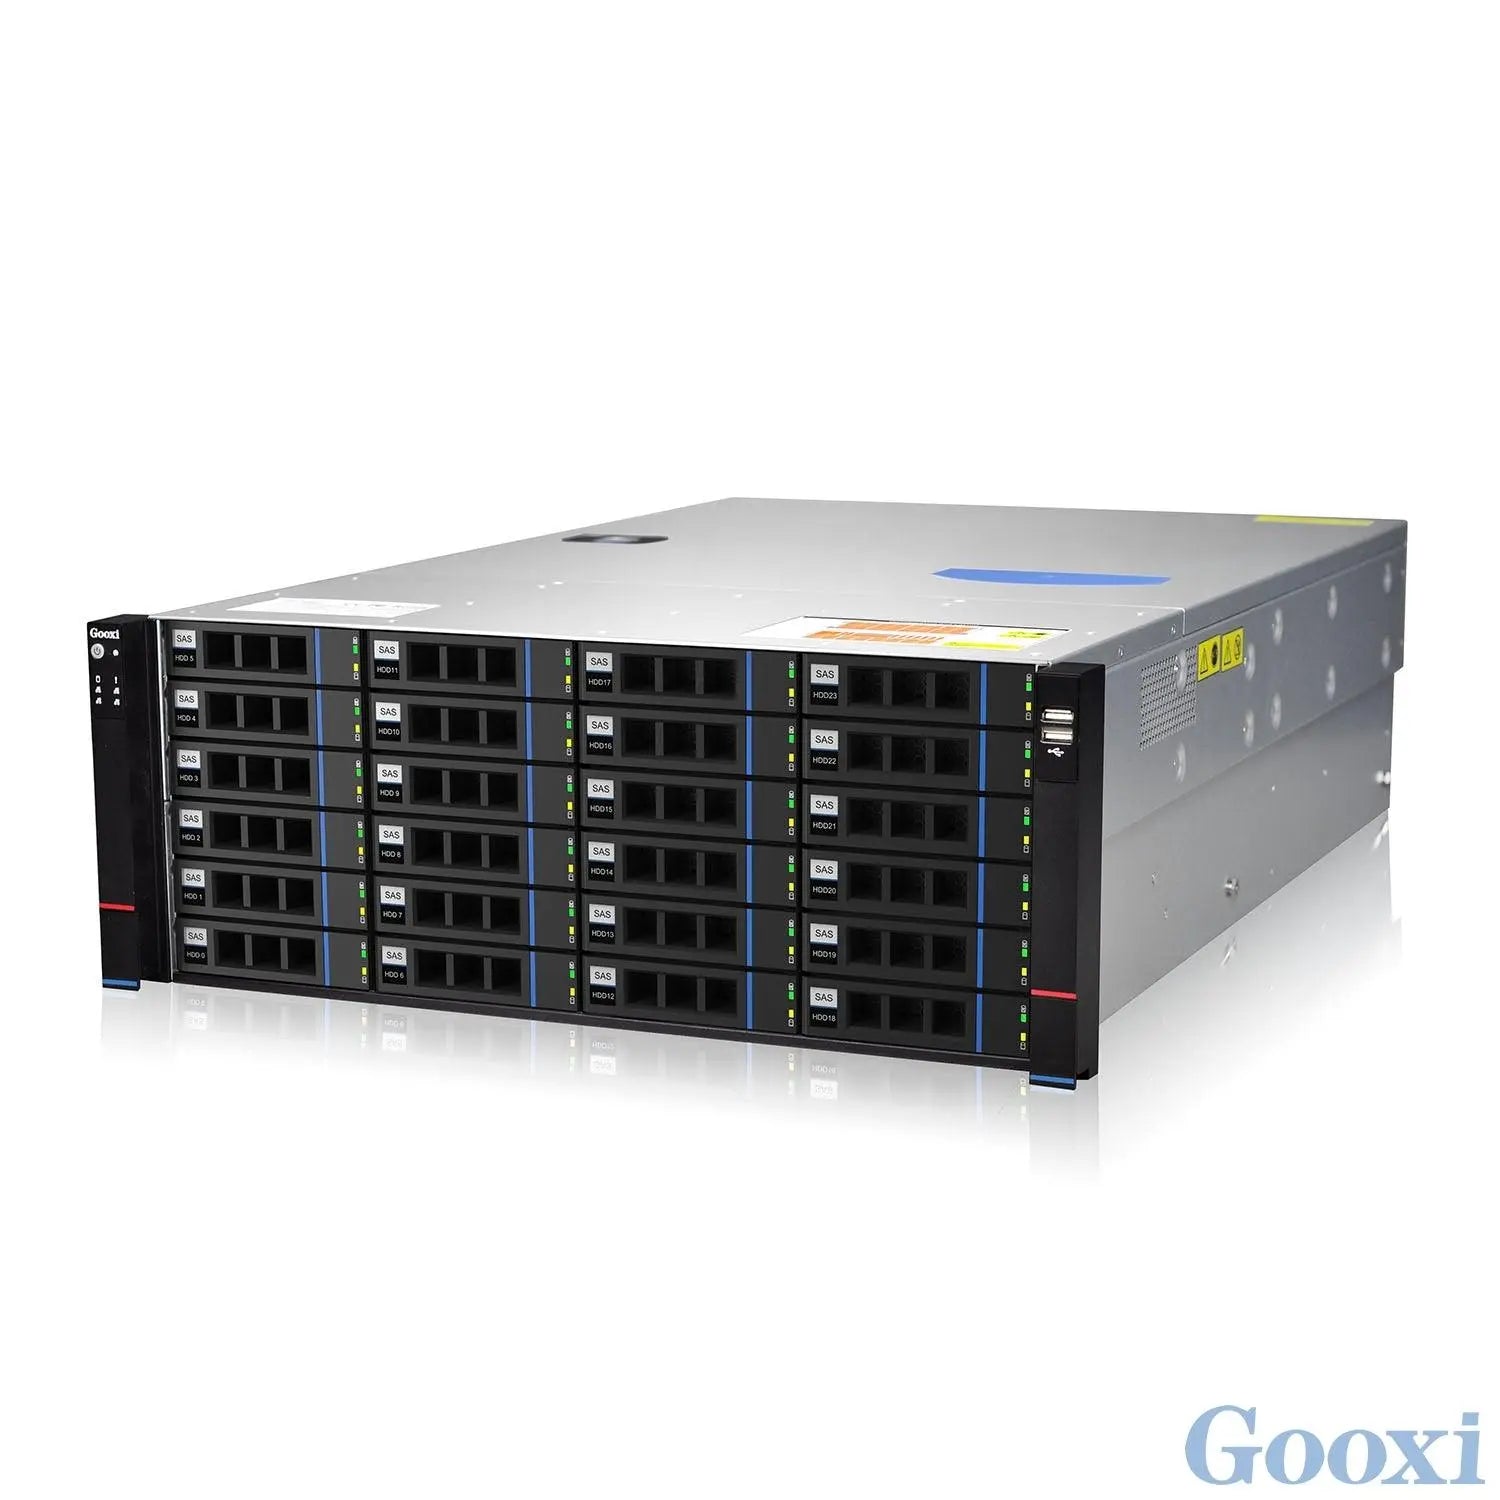 Gooxi RMC4124-670-HSE No Psu - ATX Psu support - X-Case